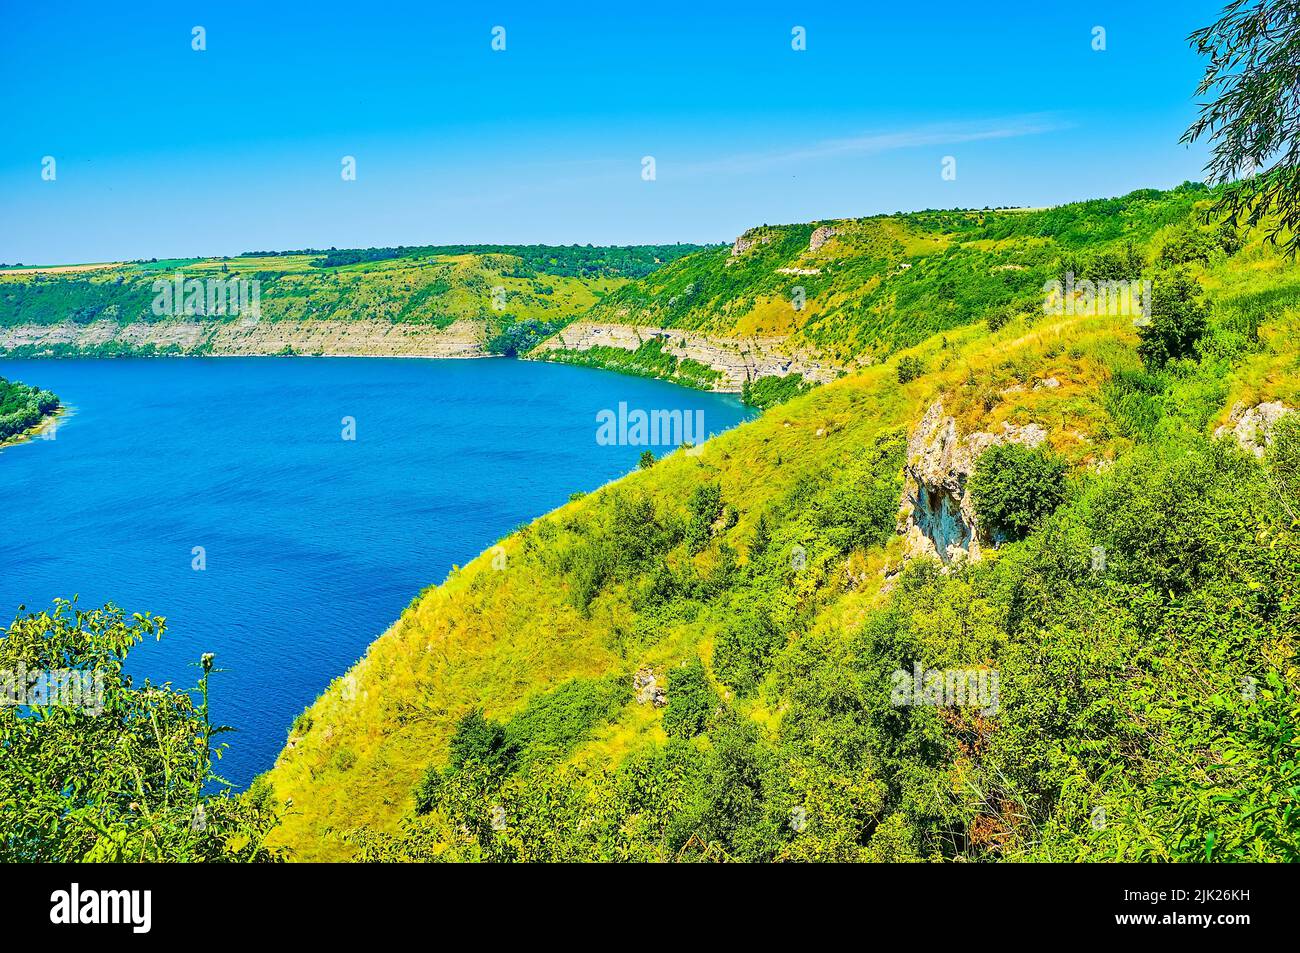 Landscape with rocky banks of Dniester river in Podilski Tovtry National Nature Park, Ukraine Stock Photo